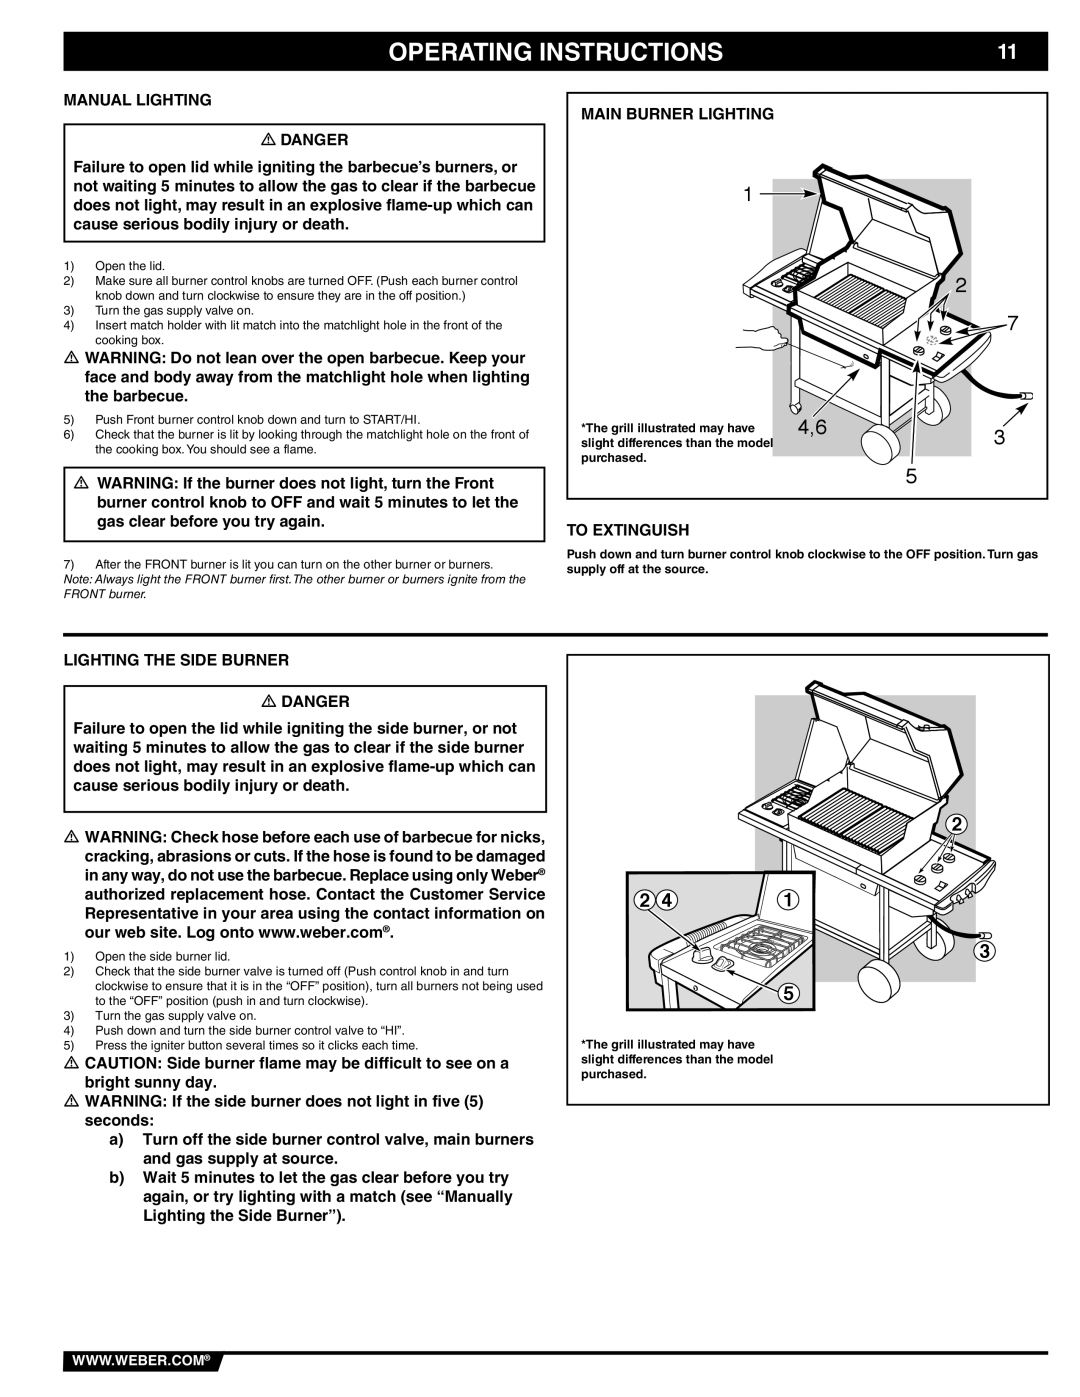 Weber 89839 manual Manual Lighting, To Extinguish, Lighting the Side Burner 